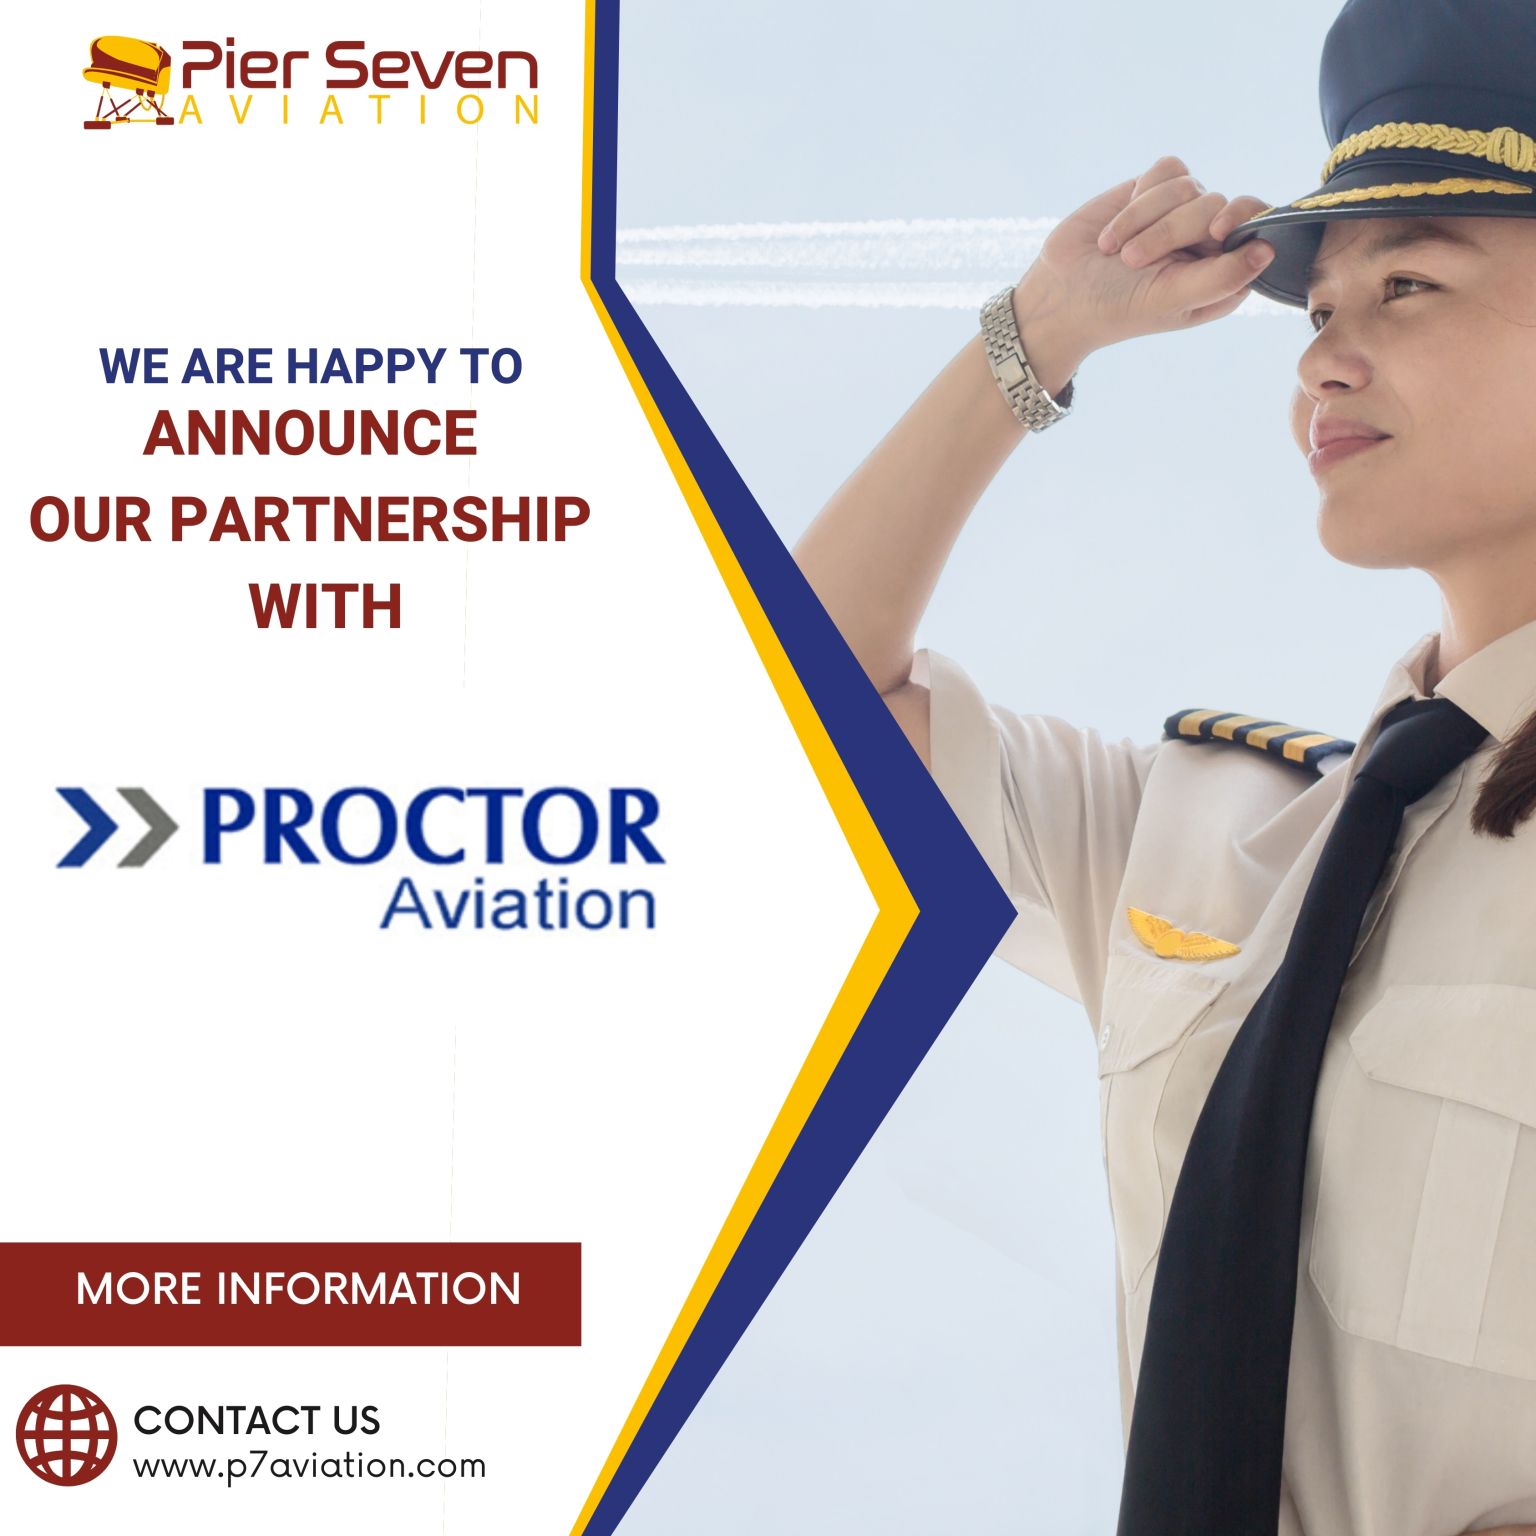 Pier Seven Aviation - Pilot Training AFM.aero